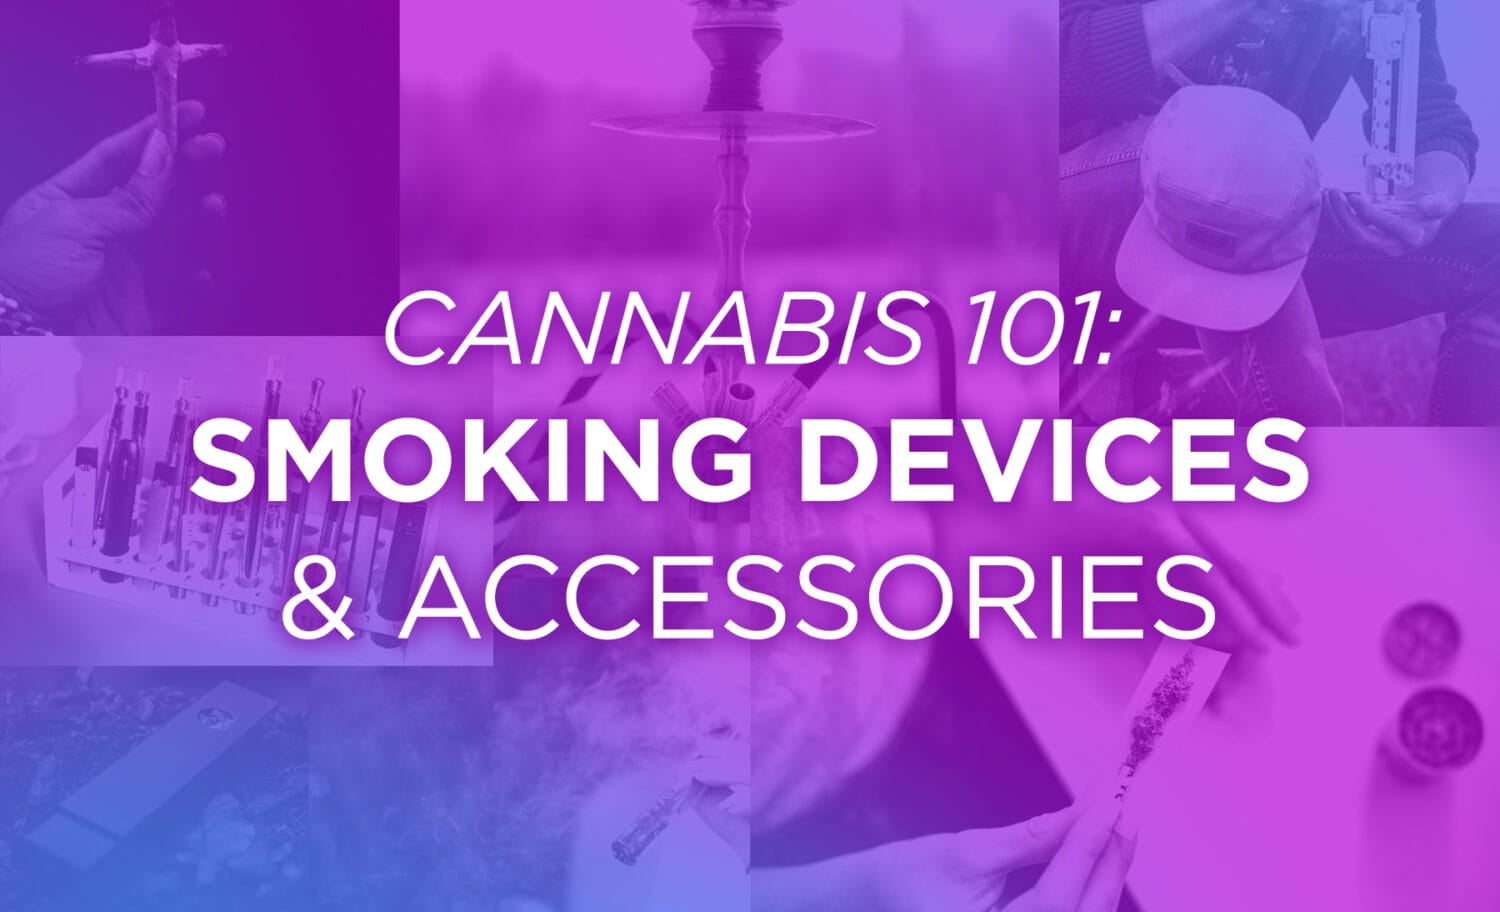 Cannabis Devices Blog Header